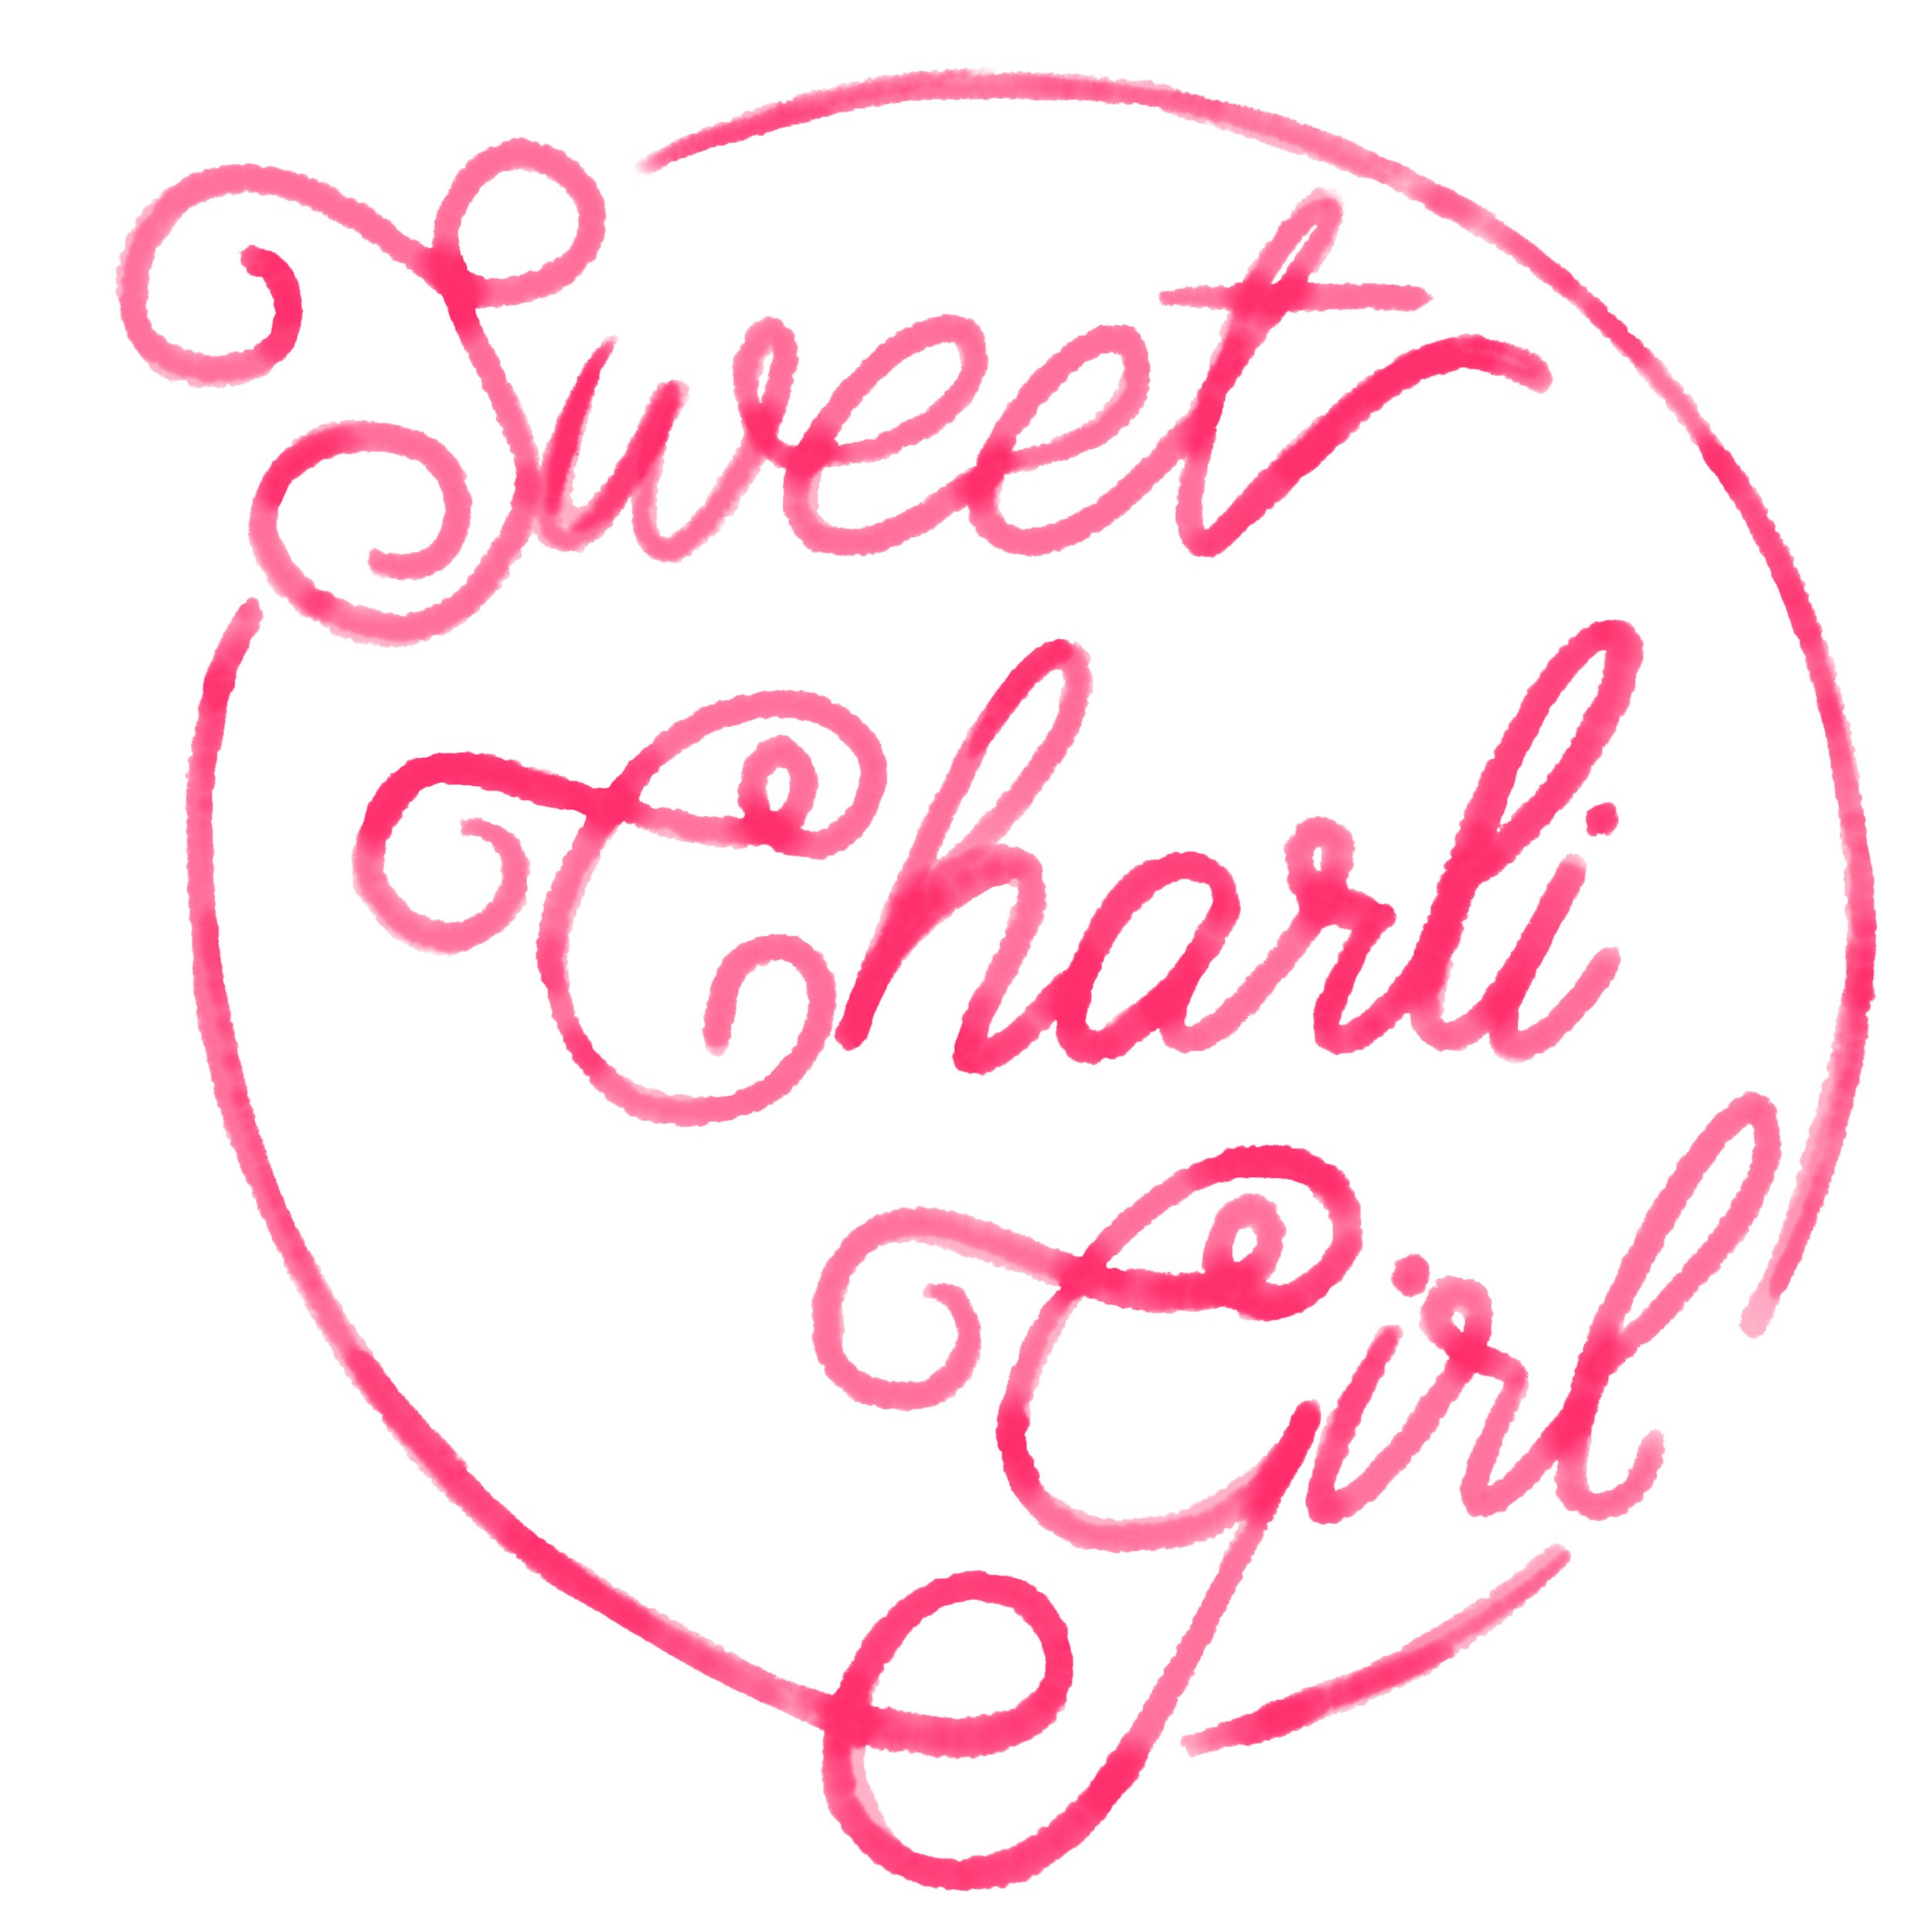 Sweet Charli Girl